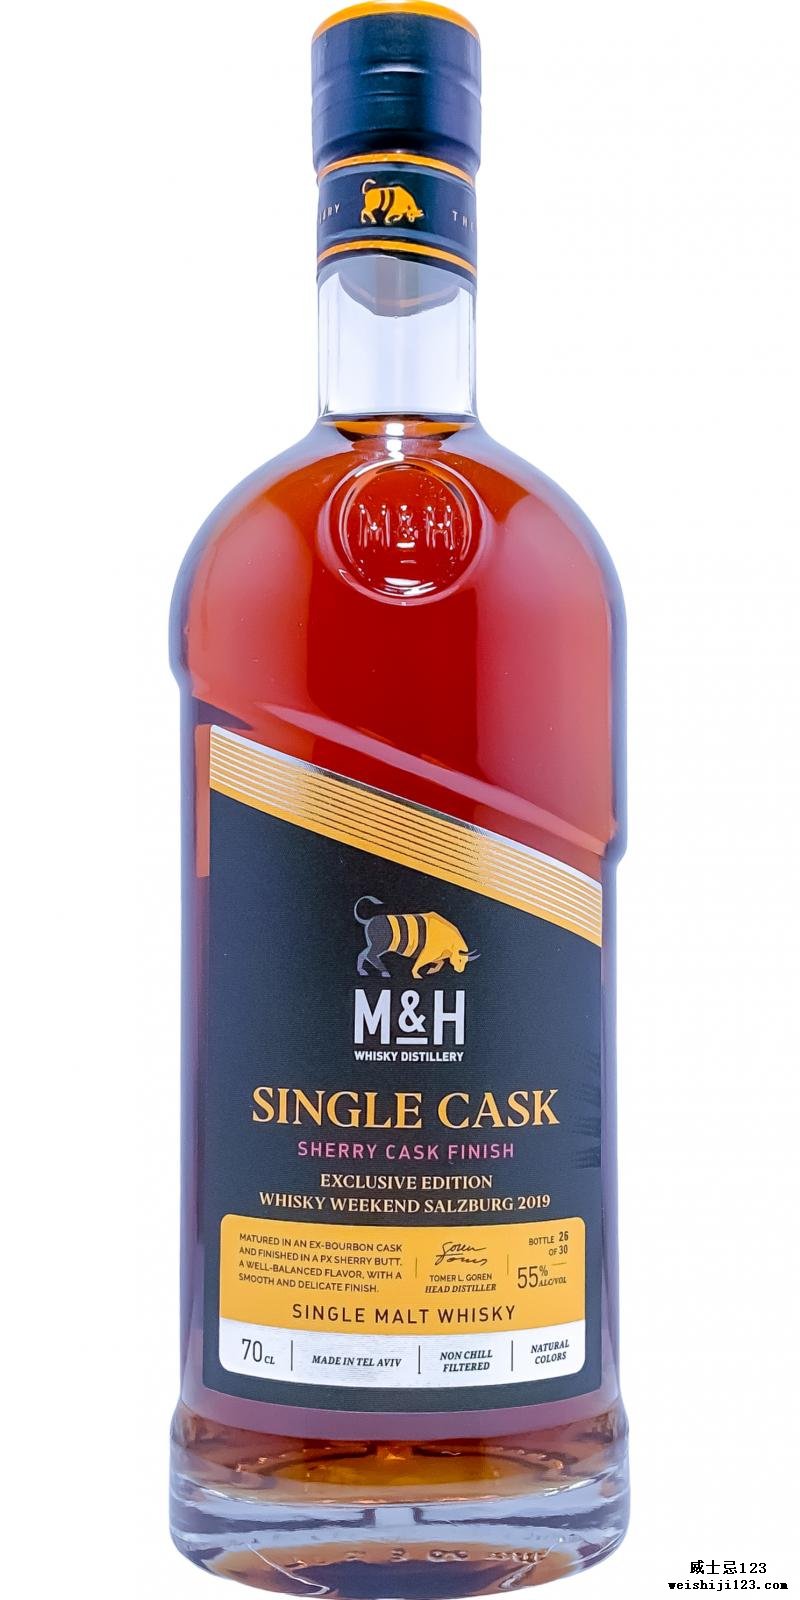 M&H Whisky Weekend Salzburg 2019